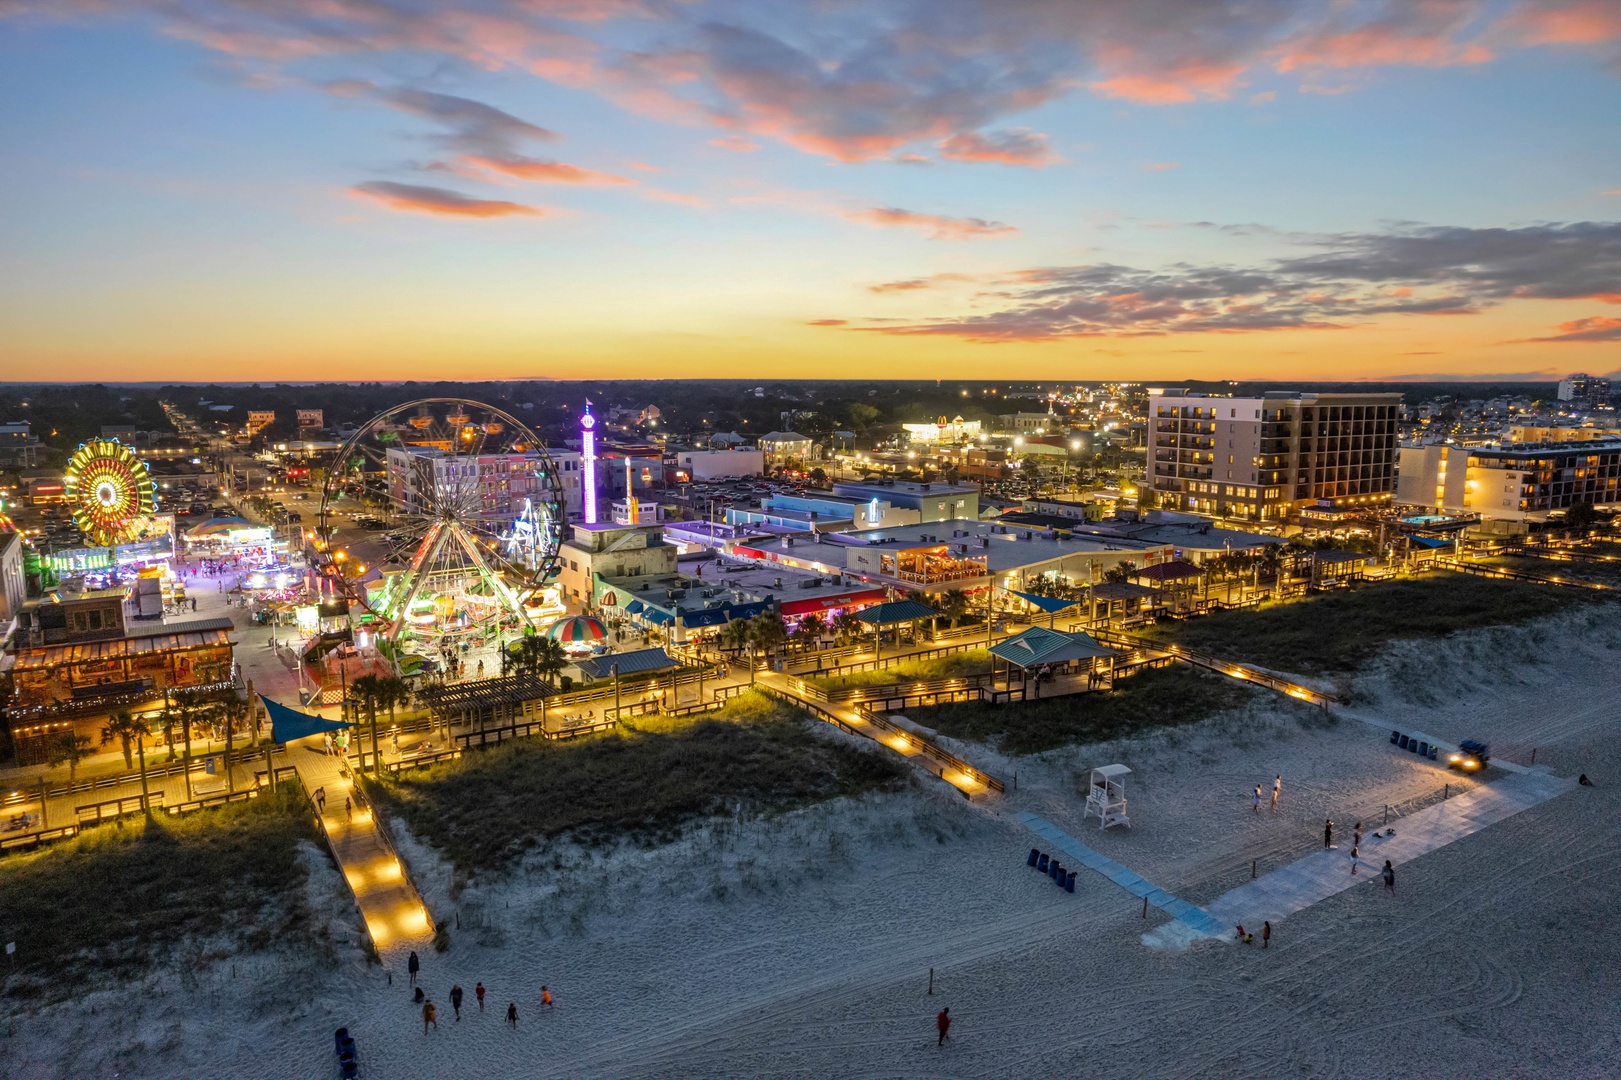 Aerial view of the Carolina Beach boardwalk